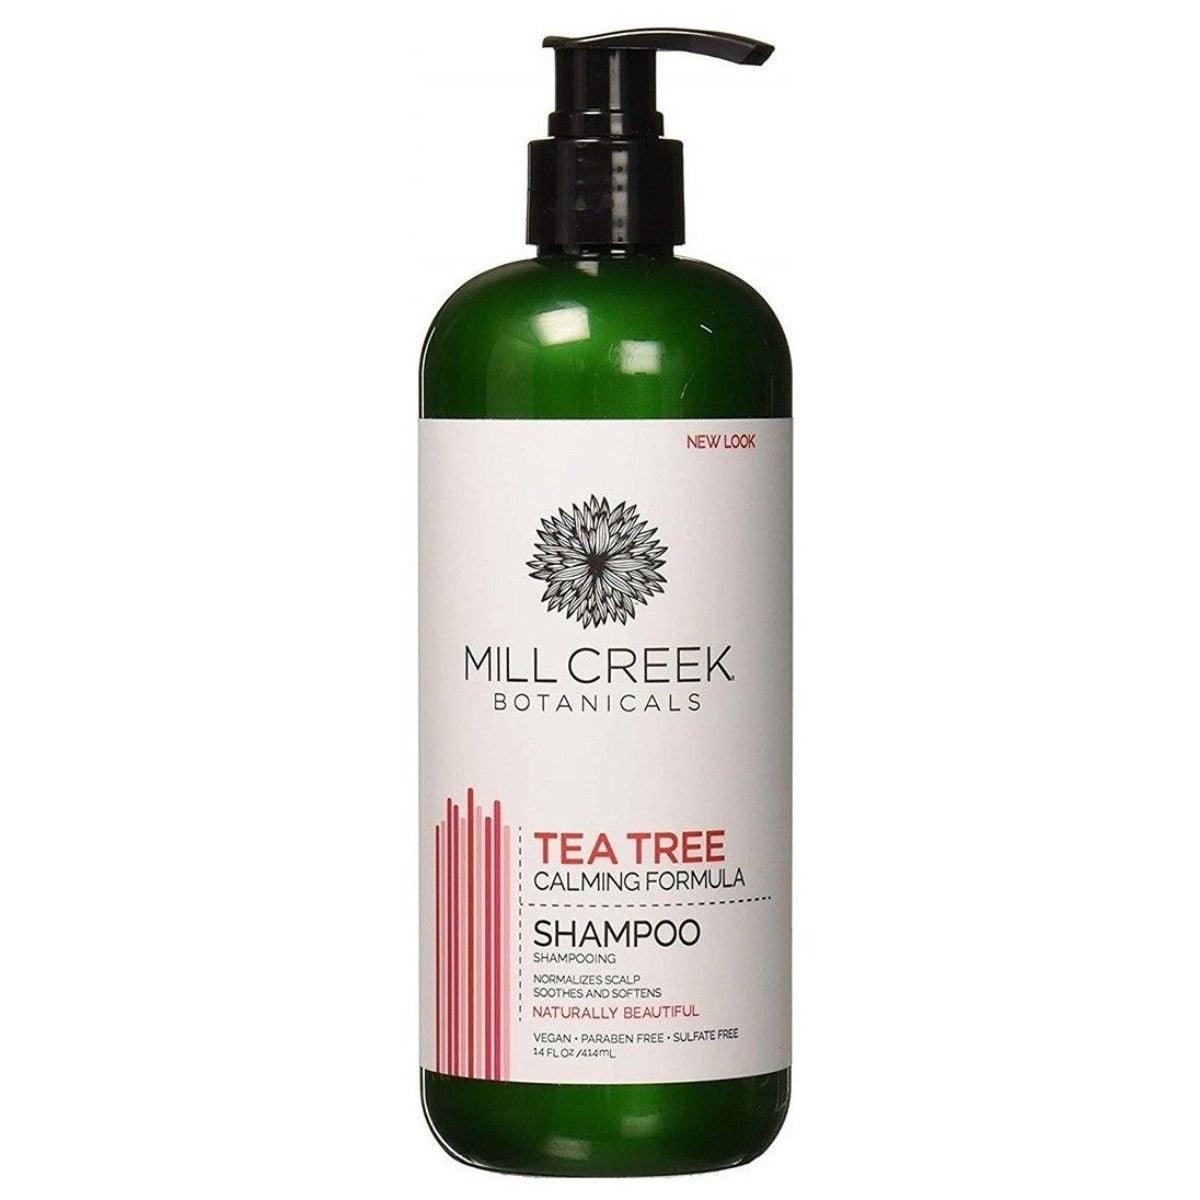 MillCreek Shampoo Tea Tree 414mL Shampoo at Village Vitamin Store